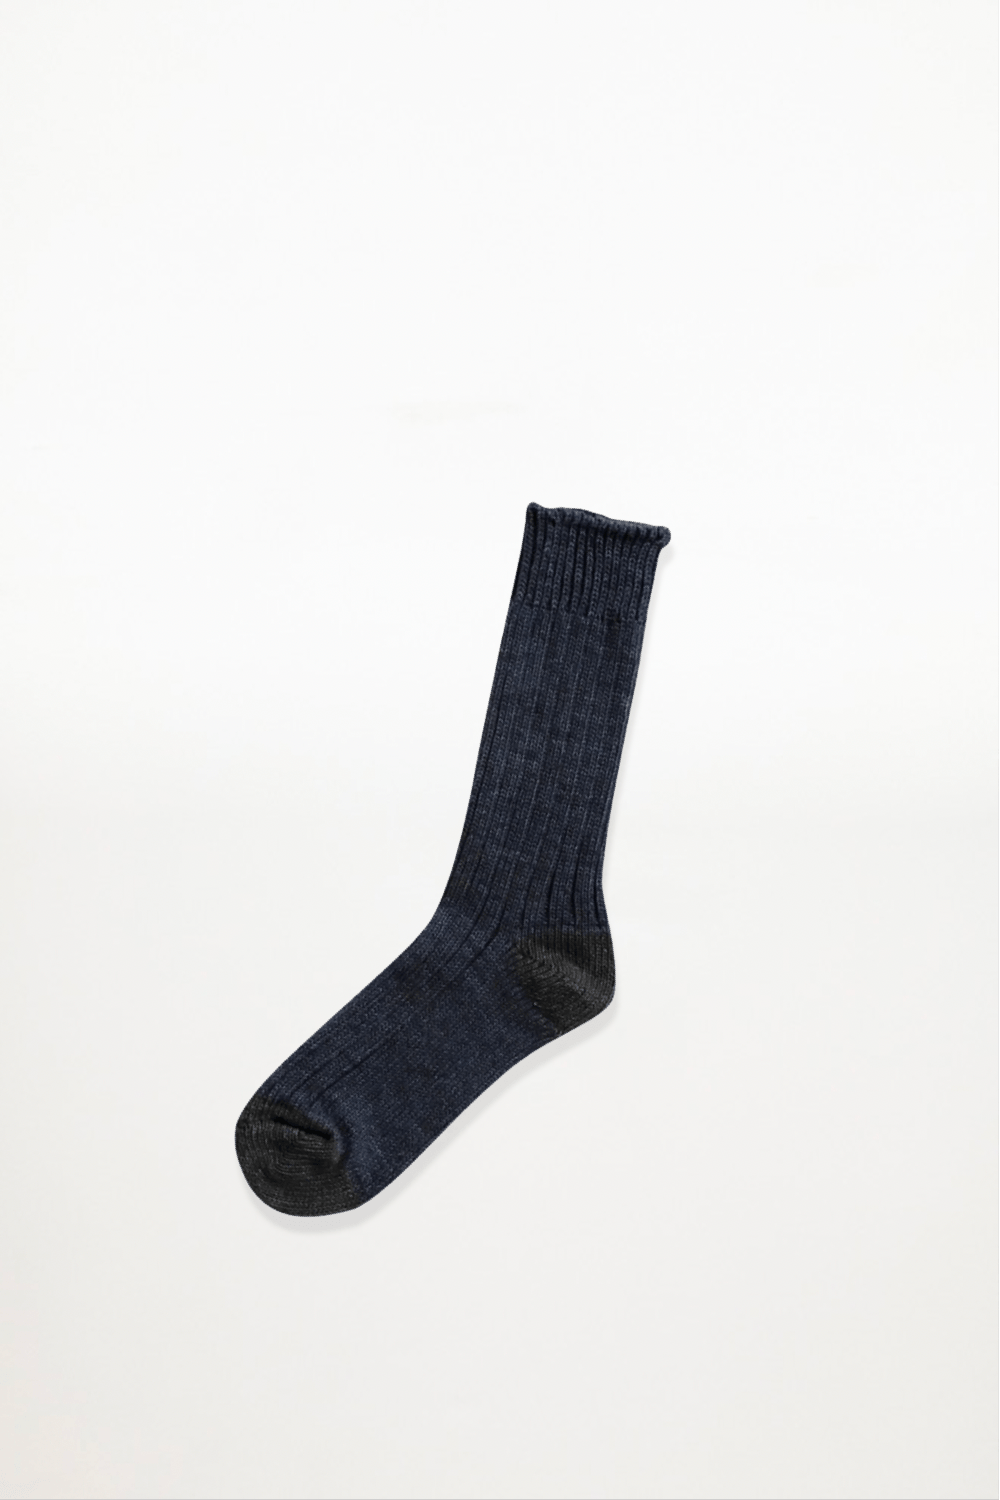 nishiguchi kutsushita - Boston Cotton ribbed socks - Ensemble Studios